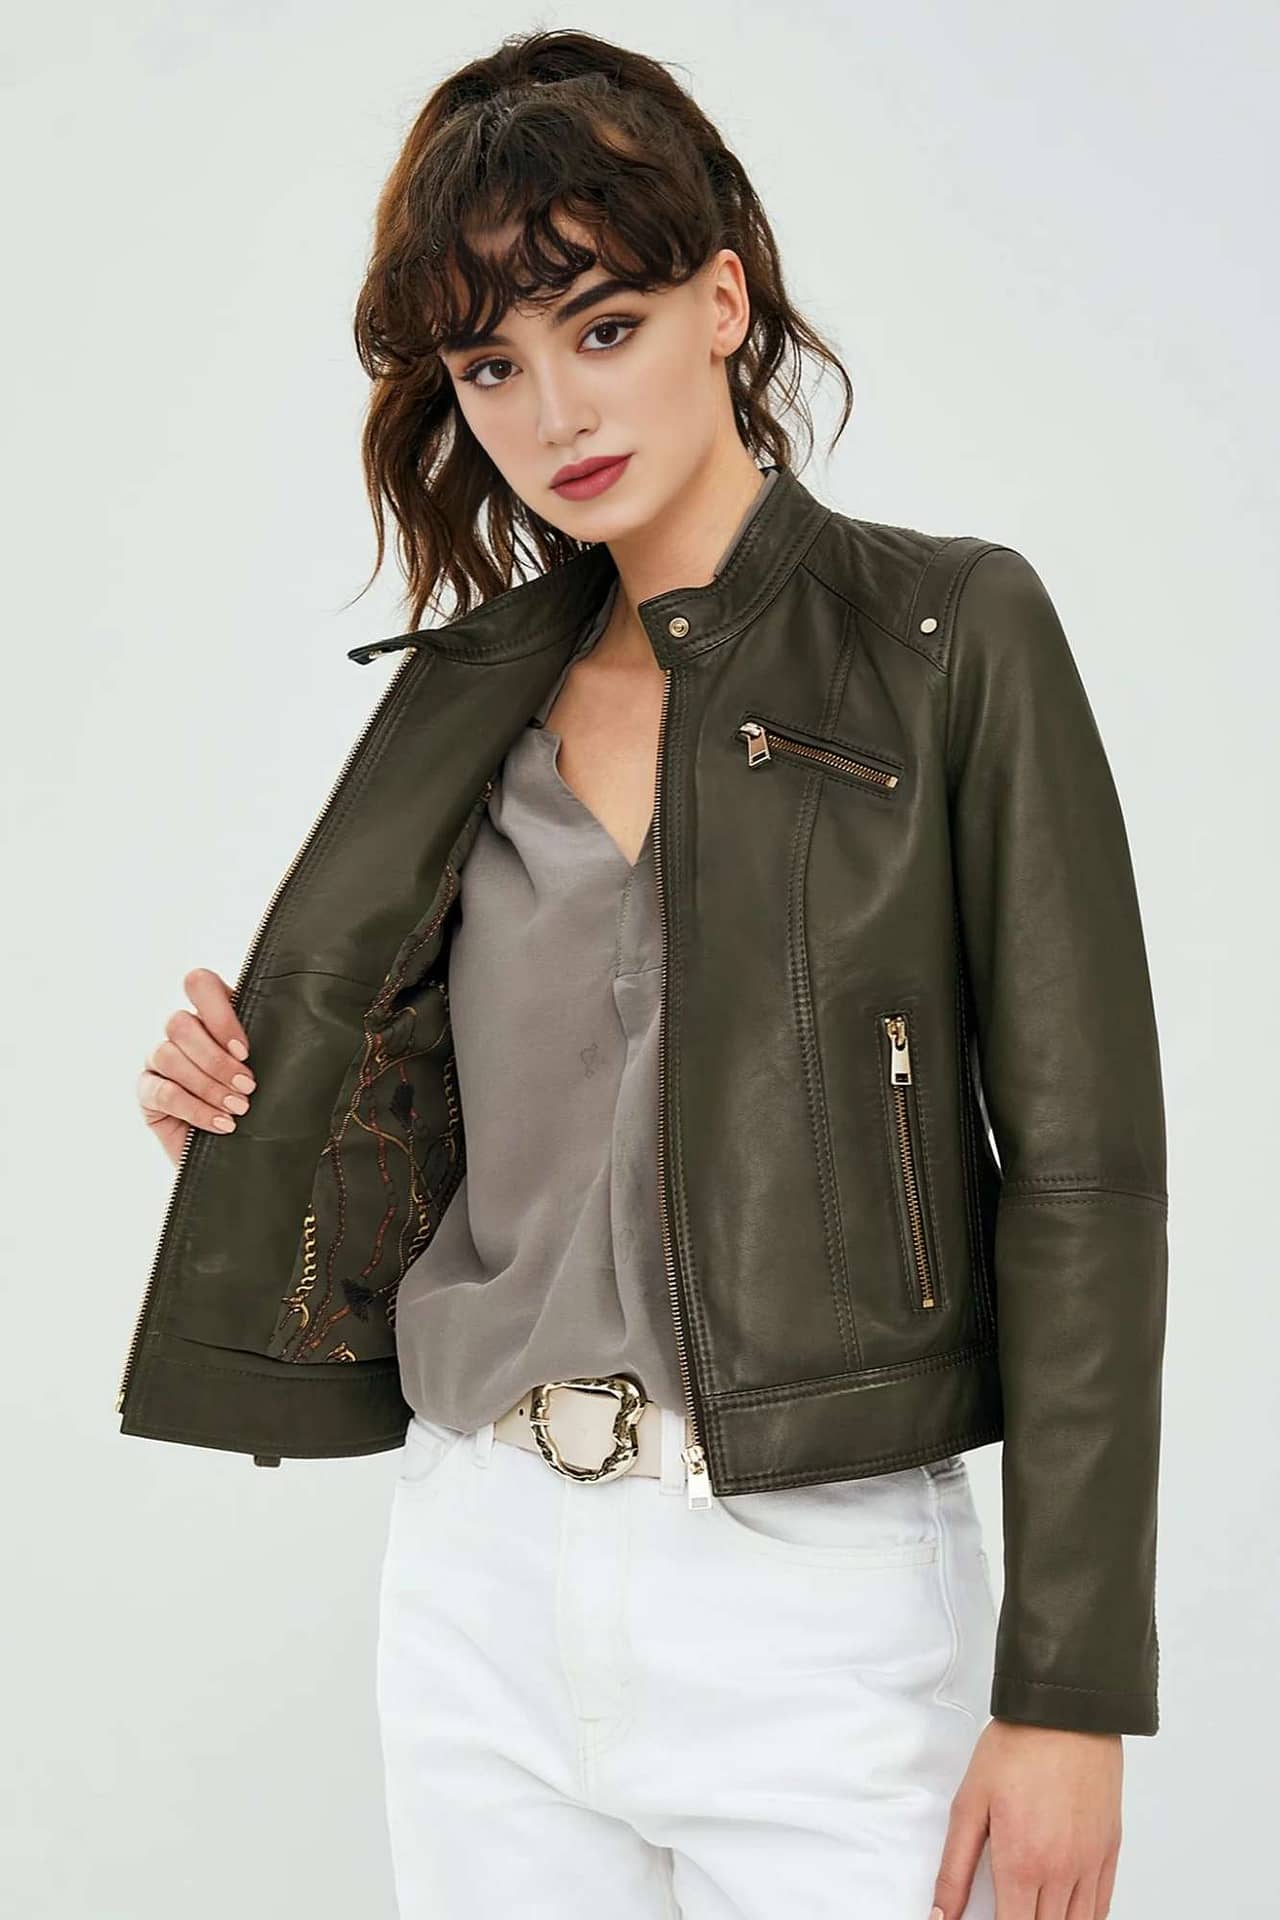 Olive Green Ladies Leather Motorcycle Jacket